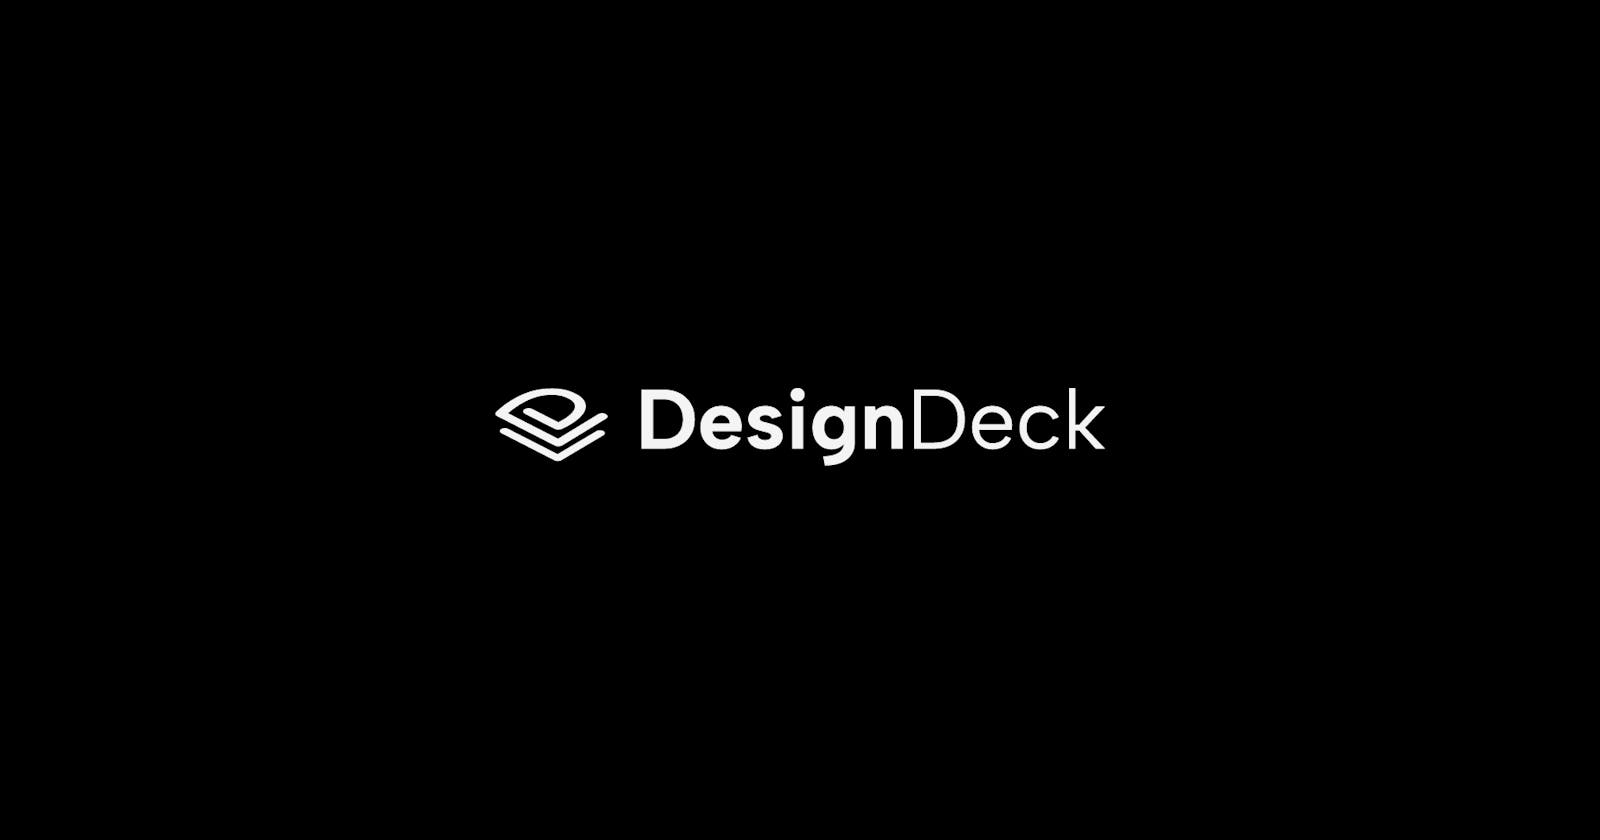 What's DesignDeck?